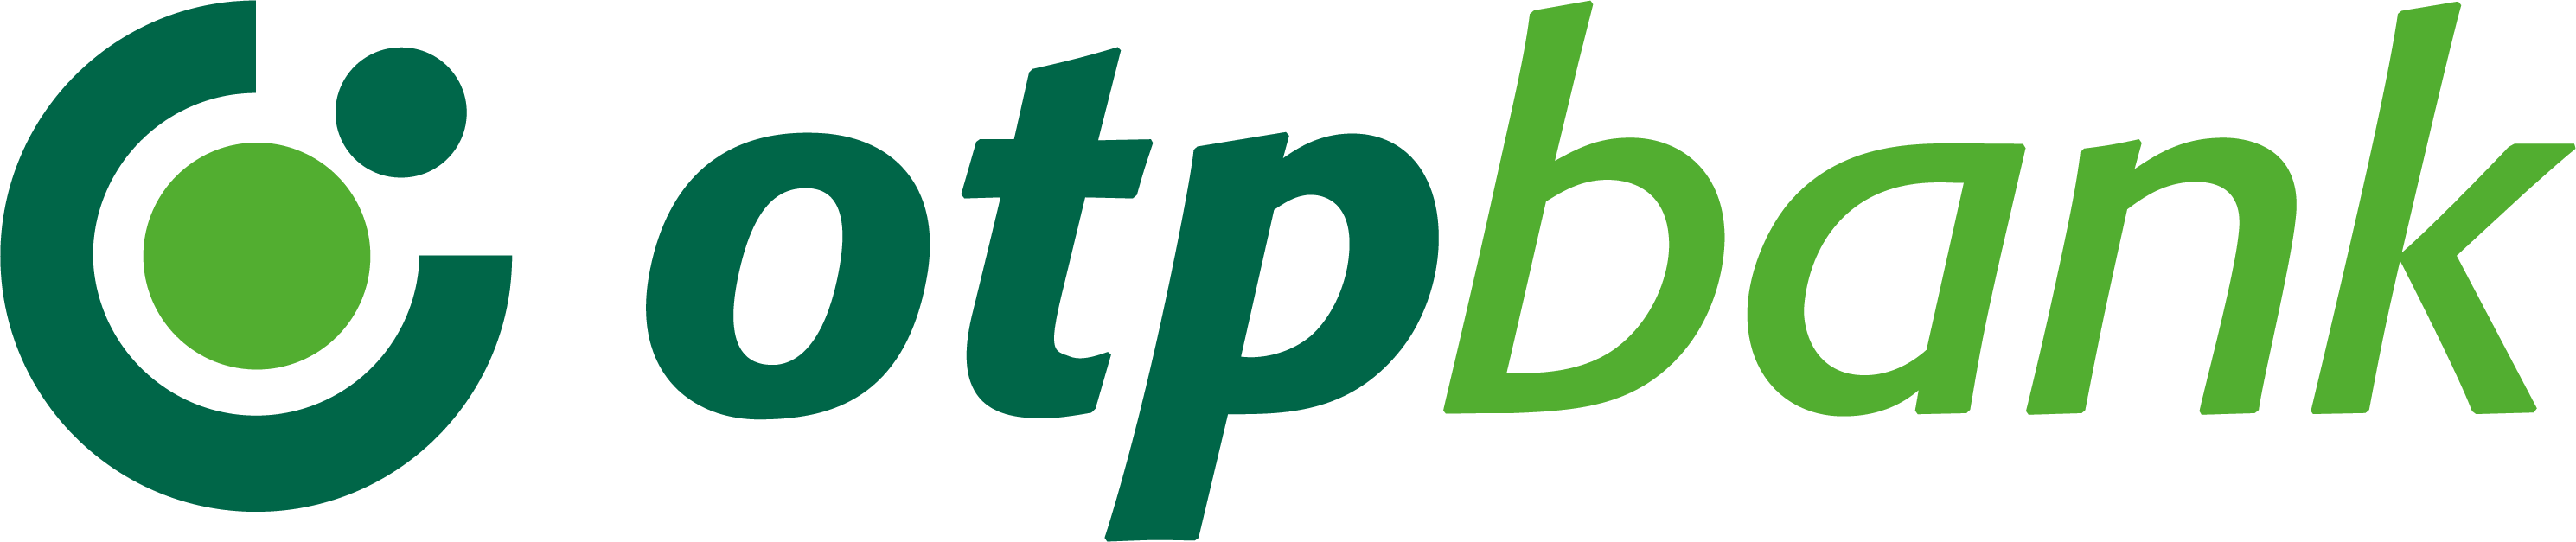 otp-bank-logo